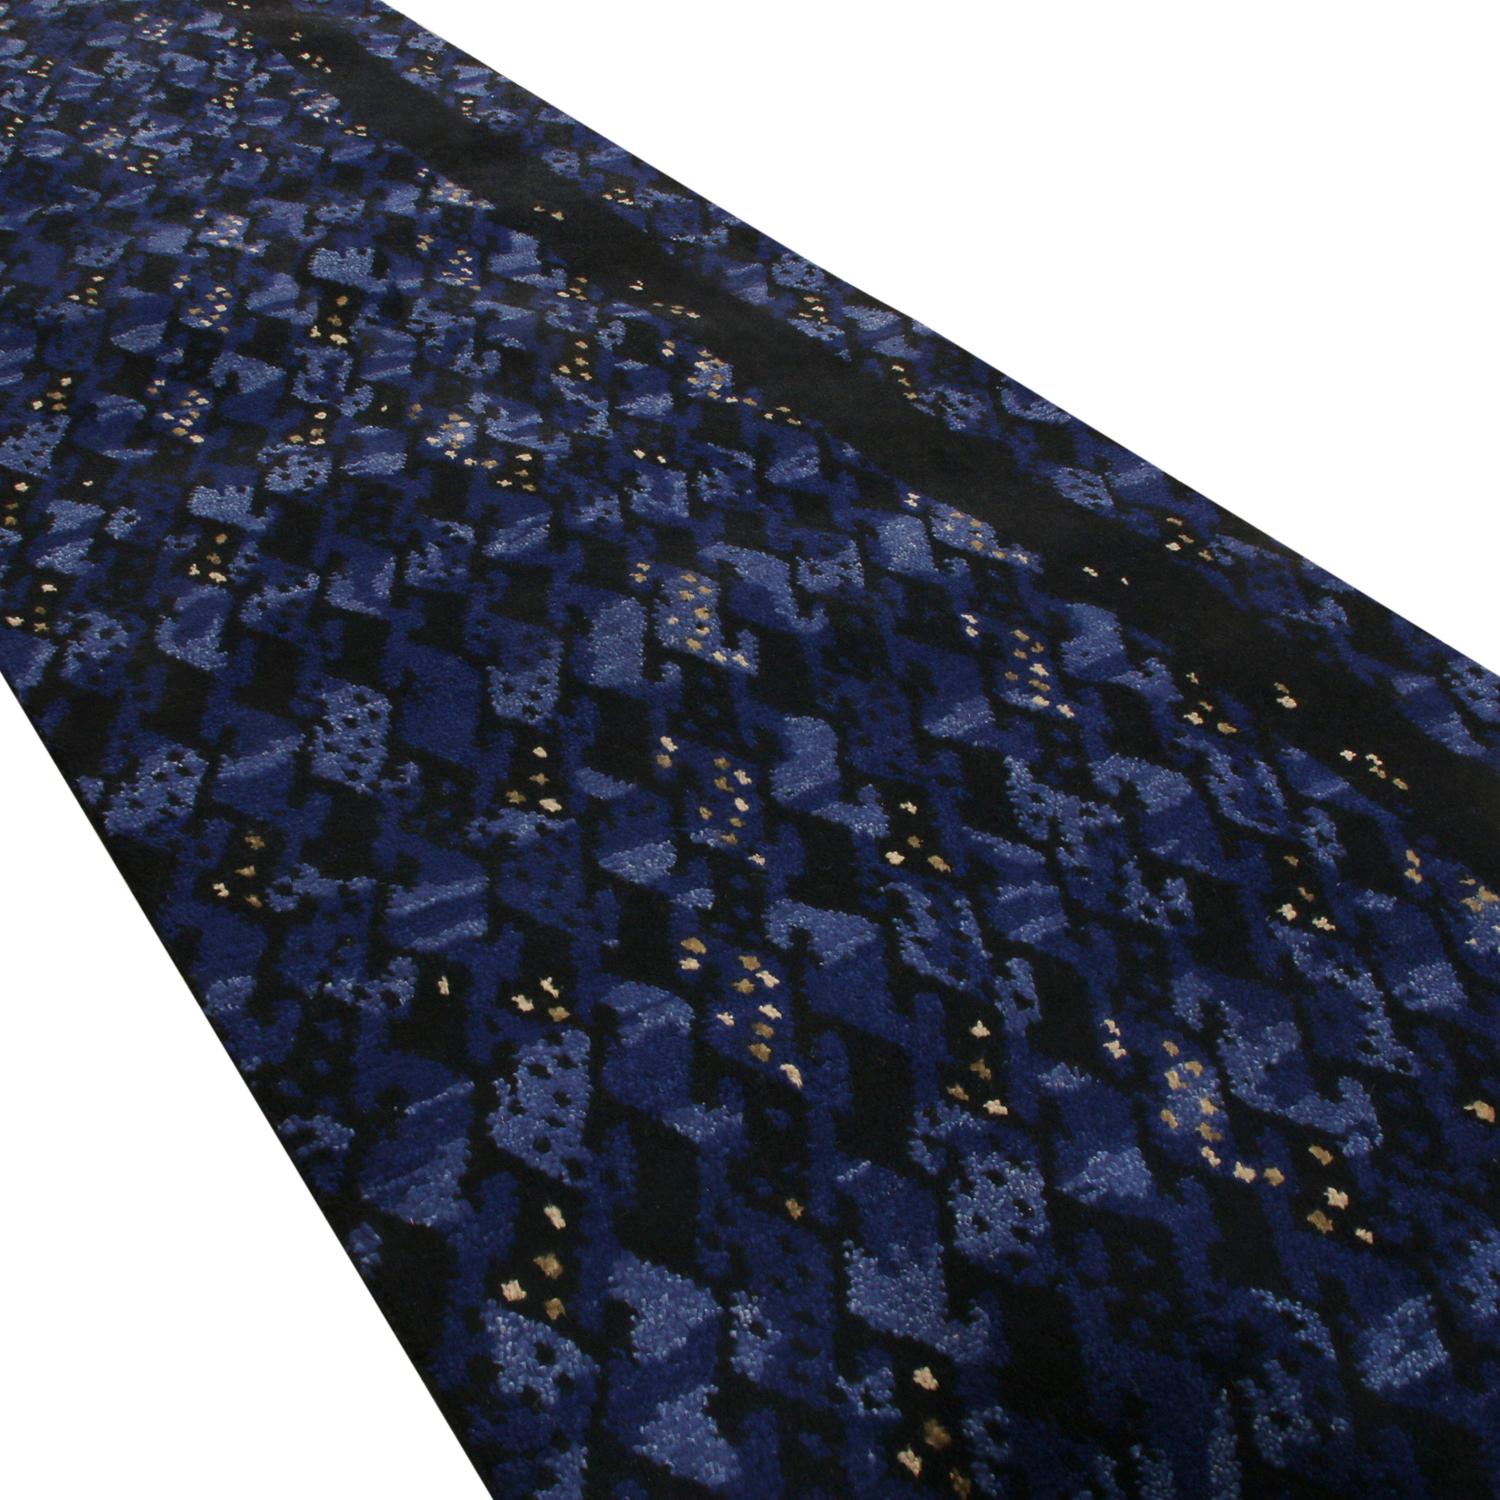 Scandinavian Modern Rug & Kilim’s Scandinavian-Inspired Geometric Black and Blue Wool Pile Runner